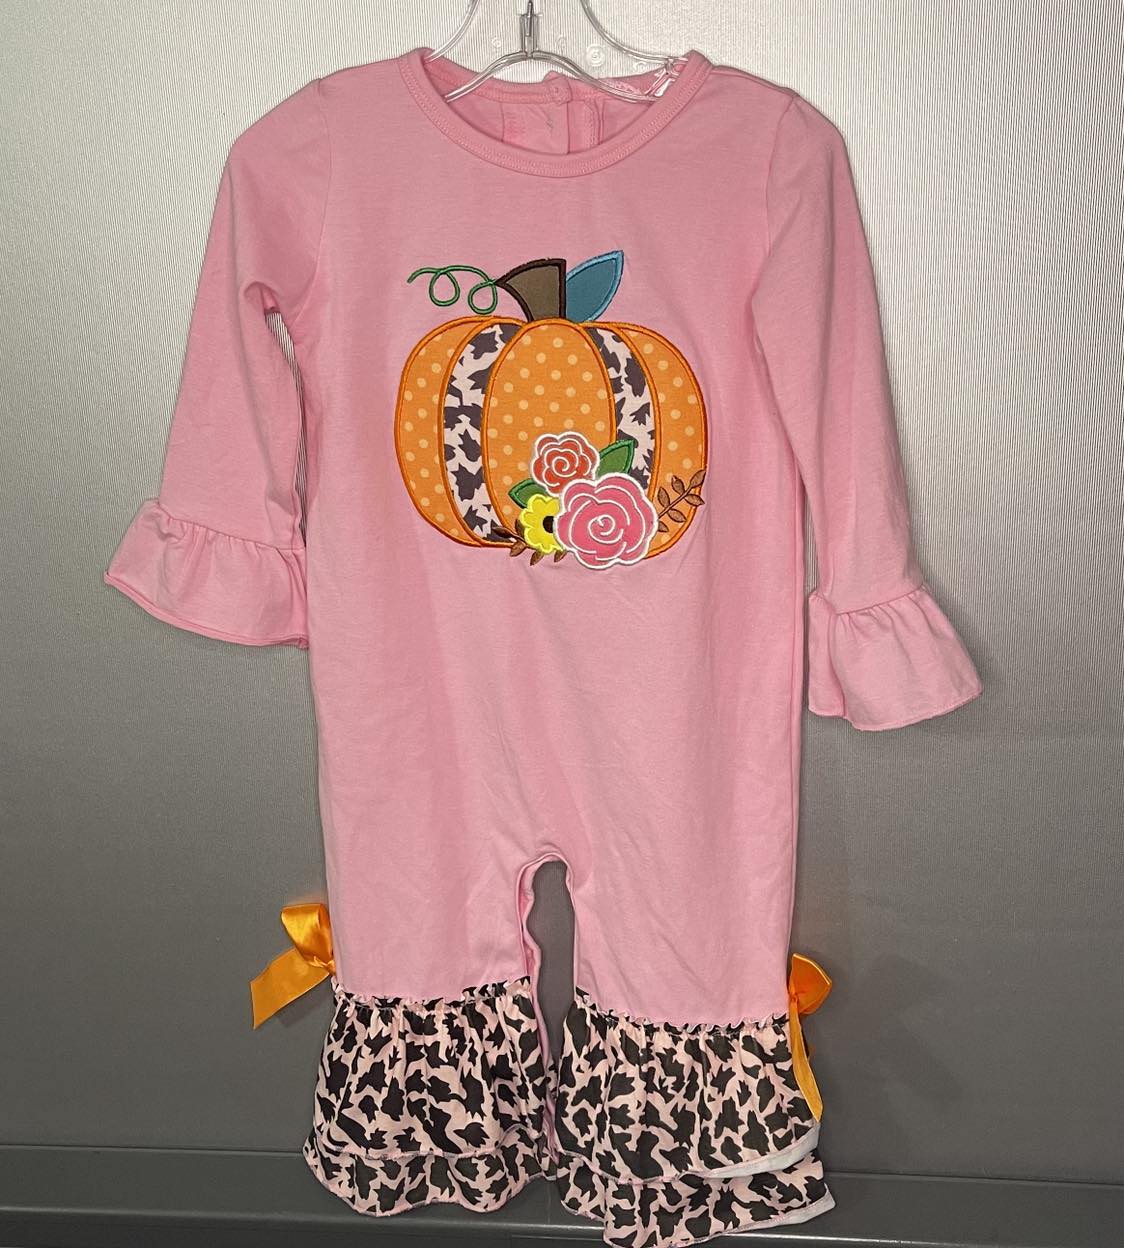 Appliqued Pink Pumpkin jump suit with Cheetah Print Ruffles